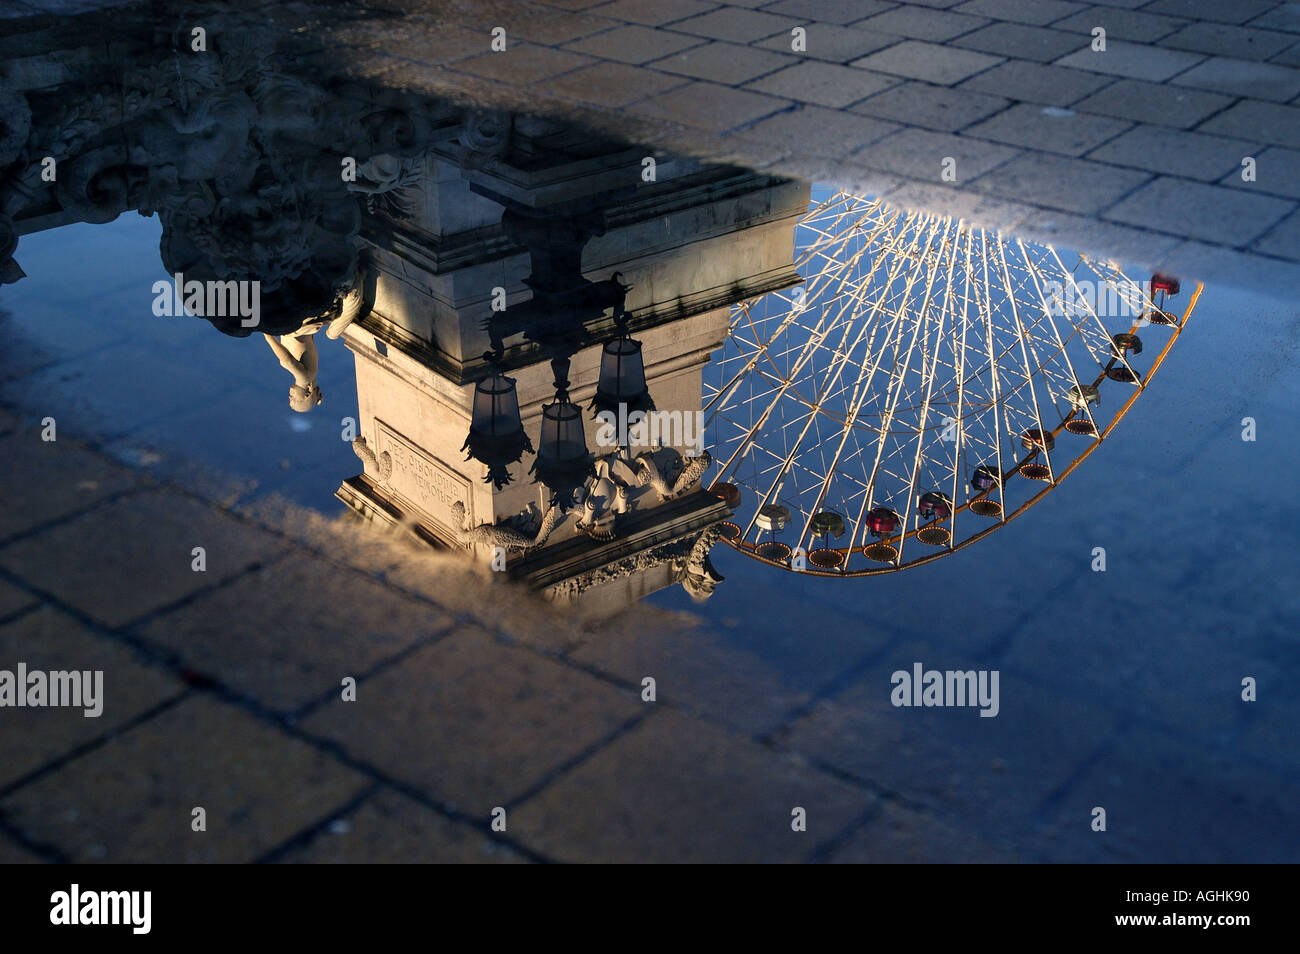 Reflection of Girondins Monument and fairground wheel Bordeaux France Stock Photo